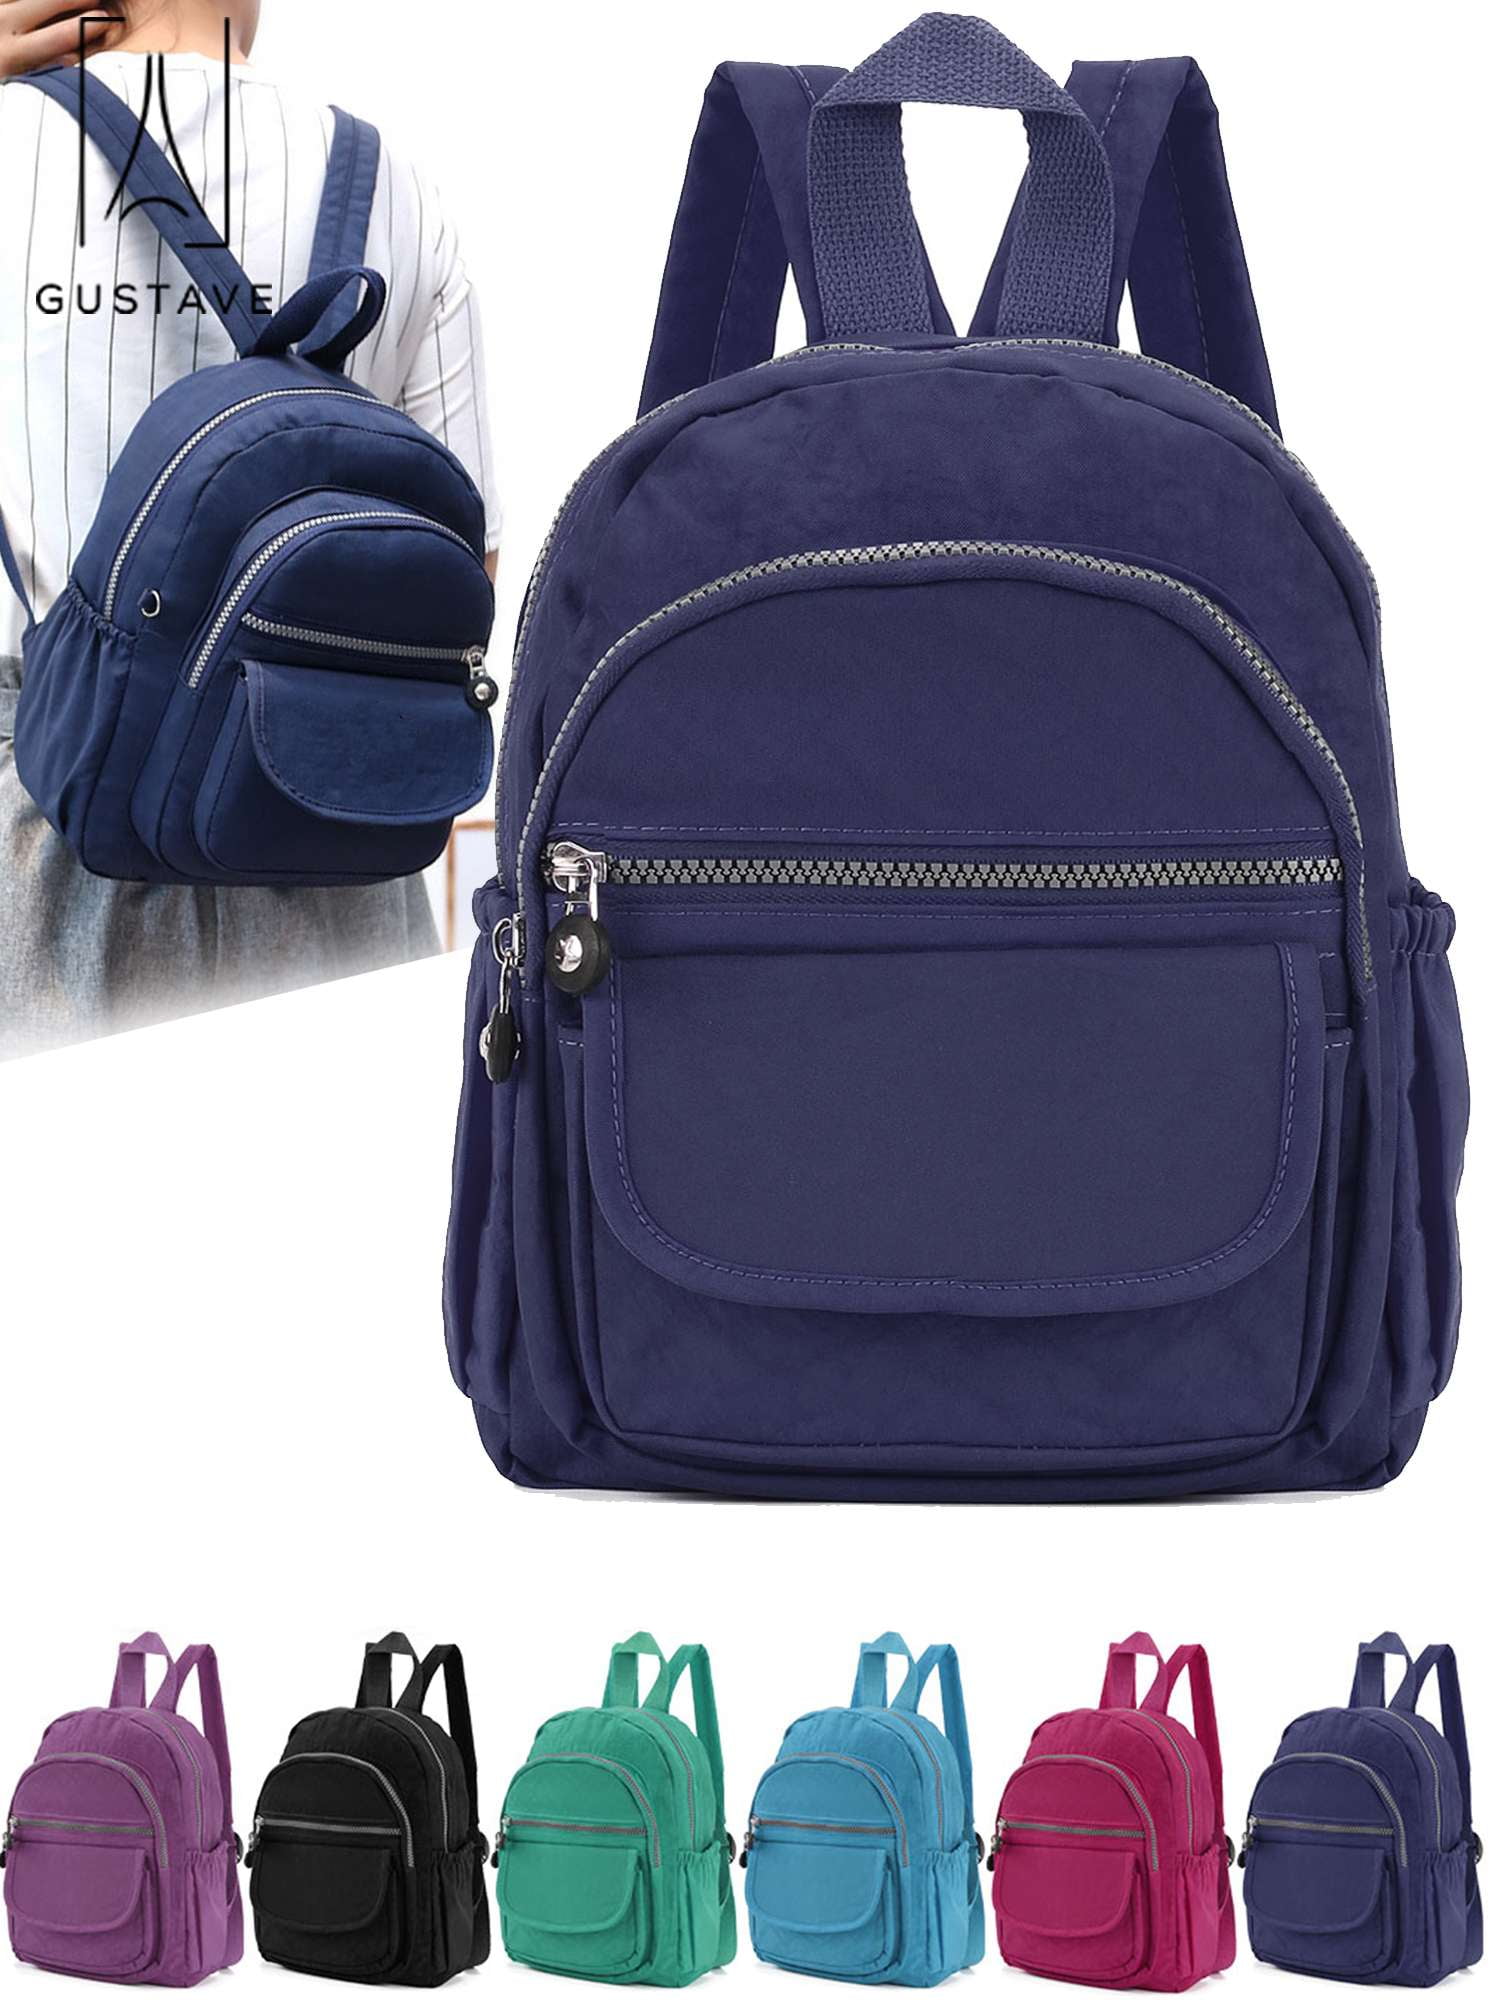 Gustave Mini Nylon Backpack Purse for Women Lightweight Anti theft Travel Backpack Daypack Casual Shoulder Handbag Girls Bookbag Navy 5ea85f71 c5c2 41f8 98a1 27ace989c5cf.996c3d1f6be667c3d153dbe44a6b4969